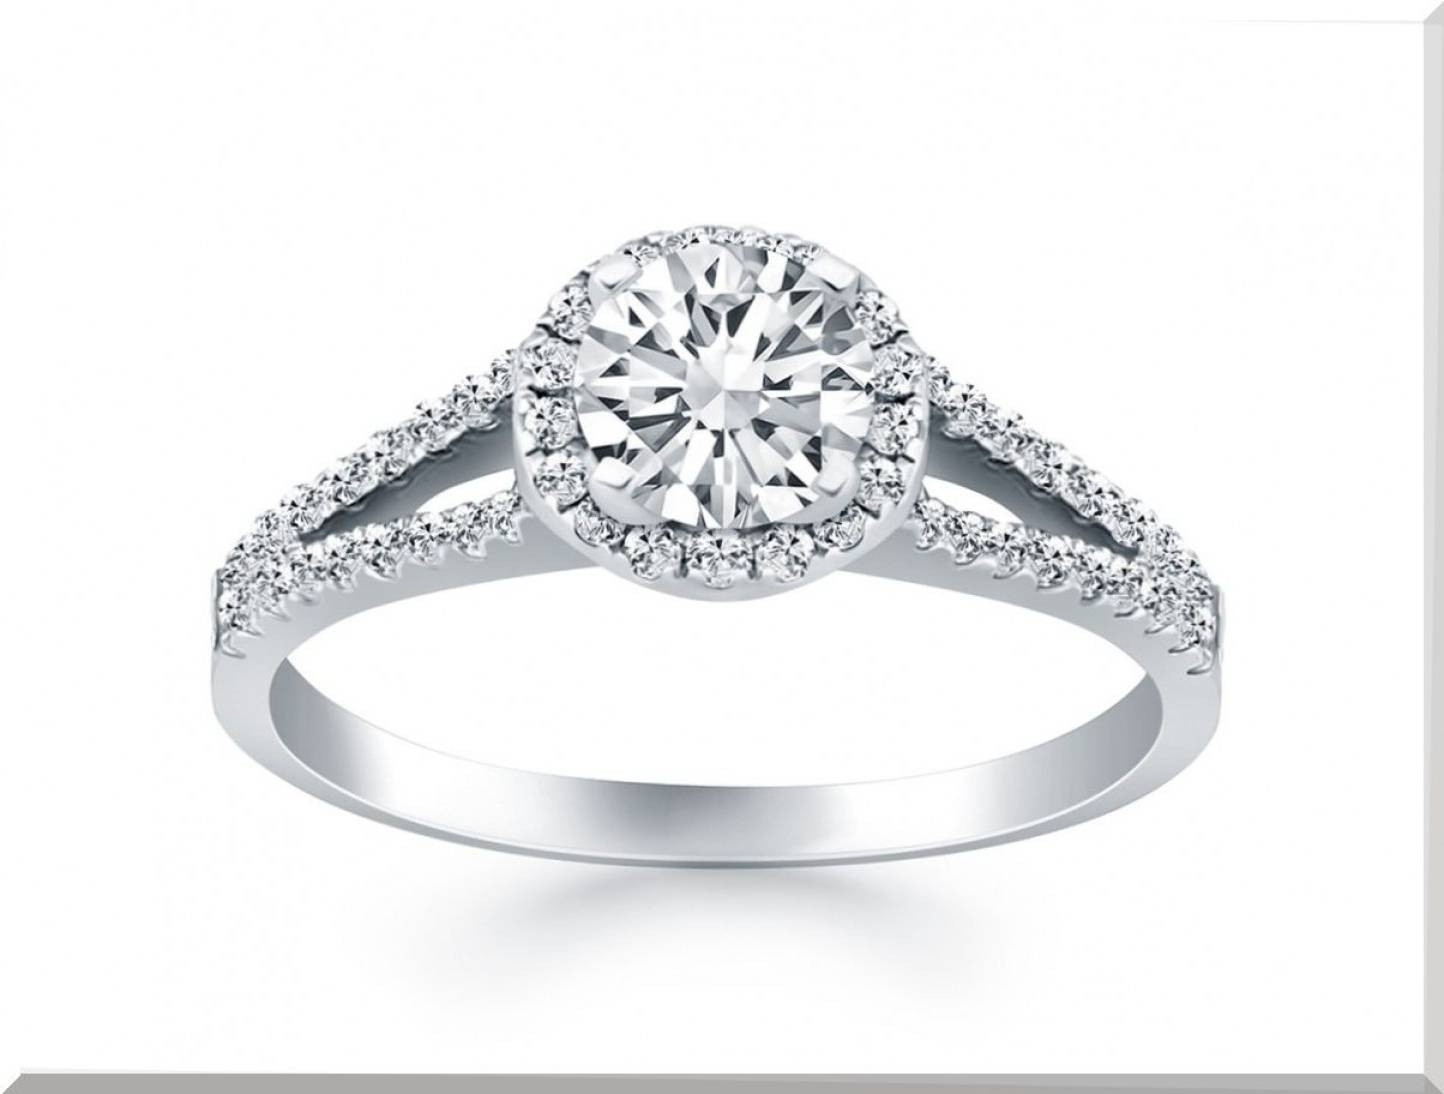 Zales Diamond Wedding Rings
 15 Best of Zales Diamond Engagement Rings